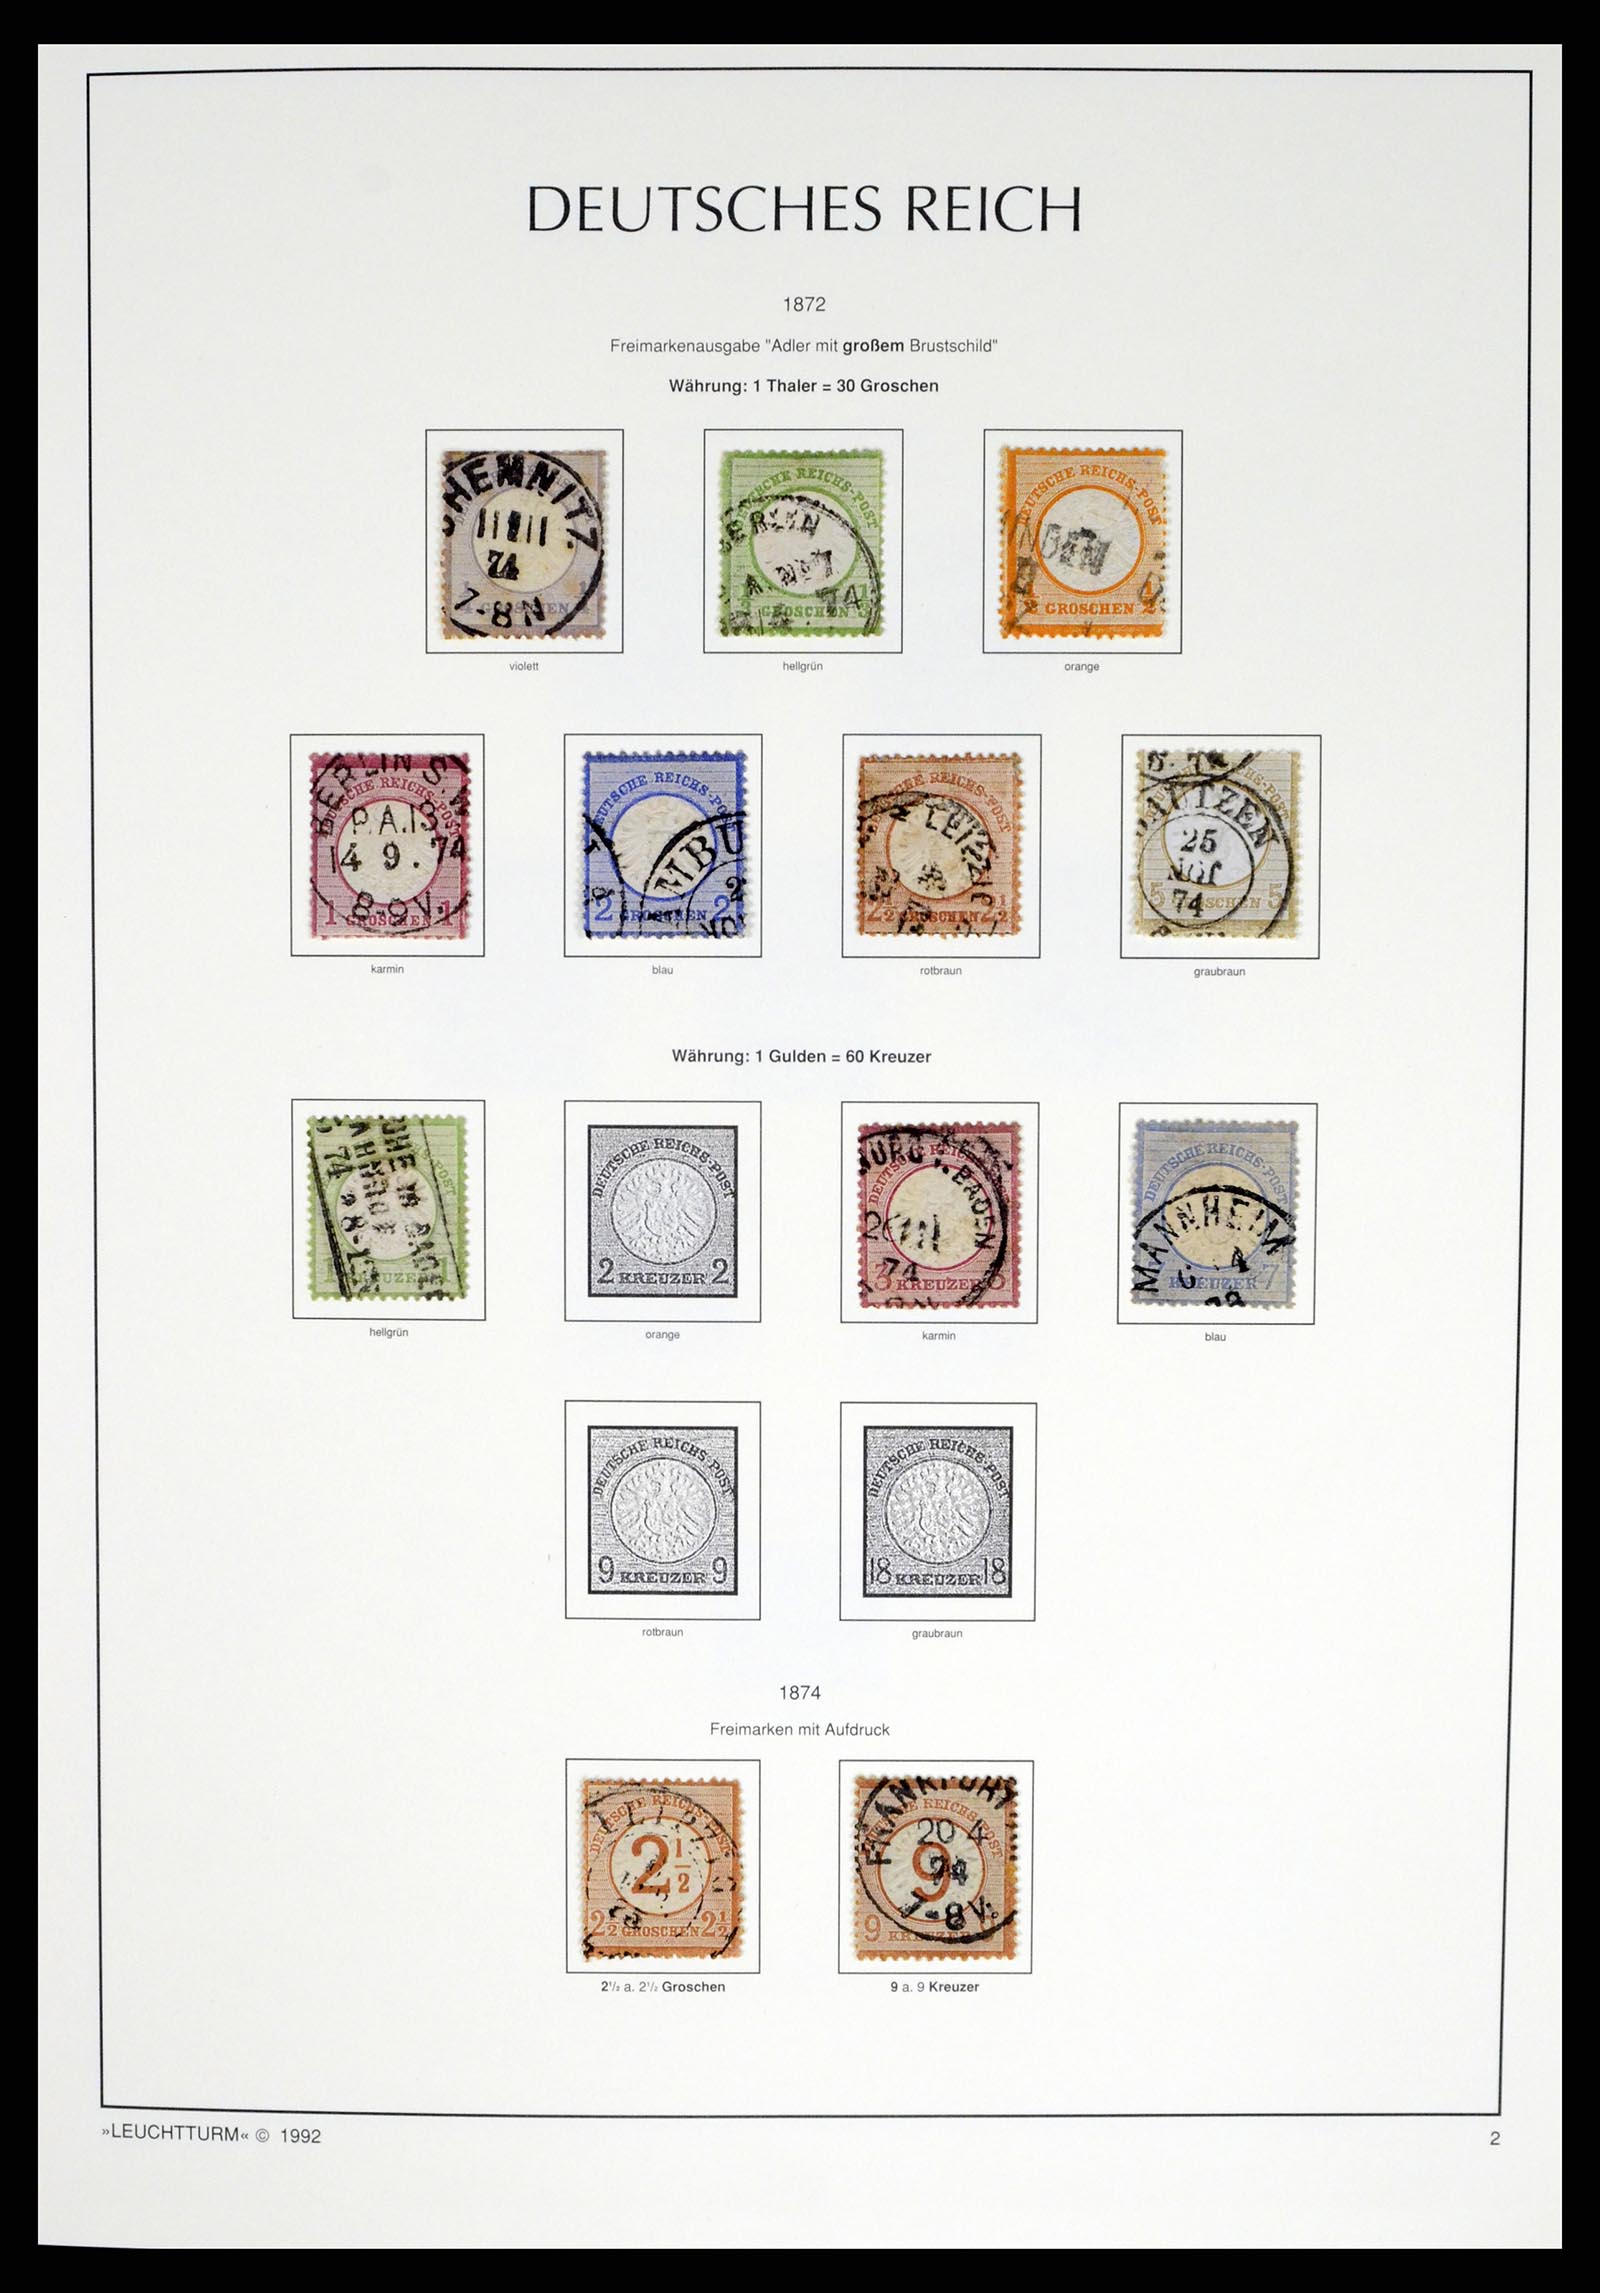 37497 002 - Stamp collection 37497 German Reich 1872-1945.